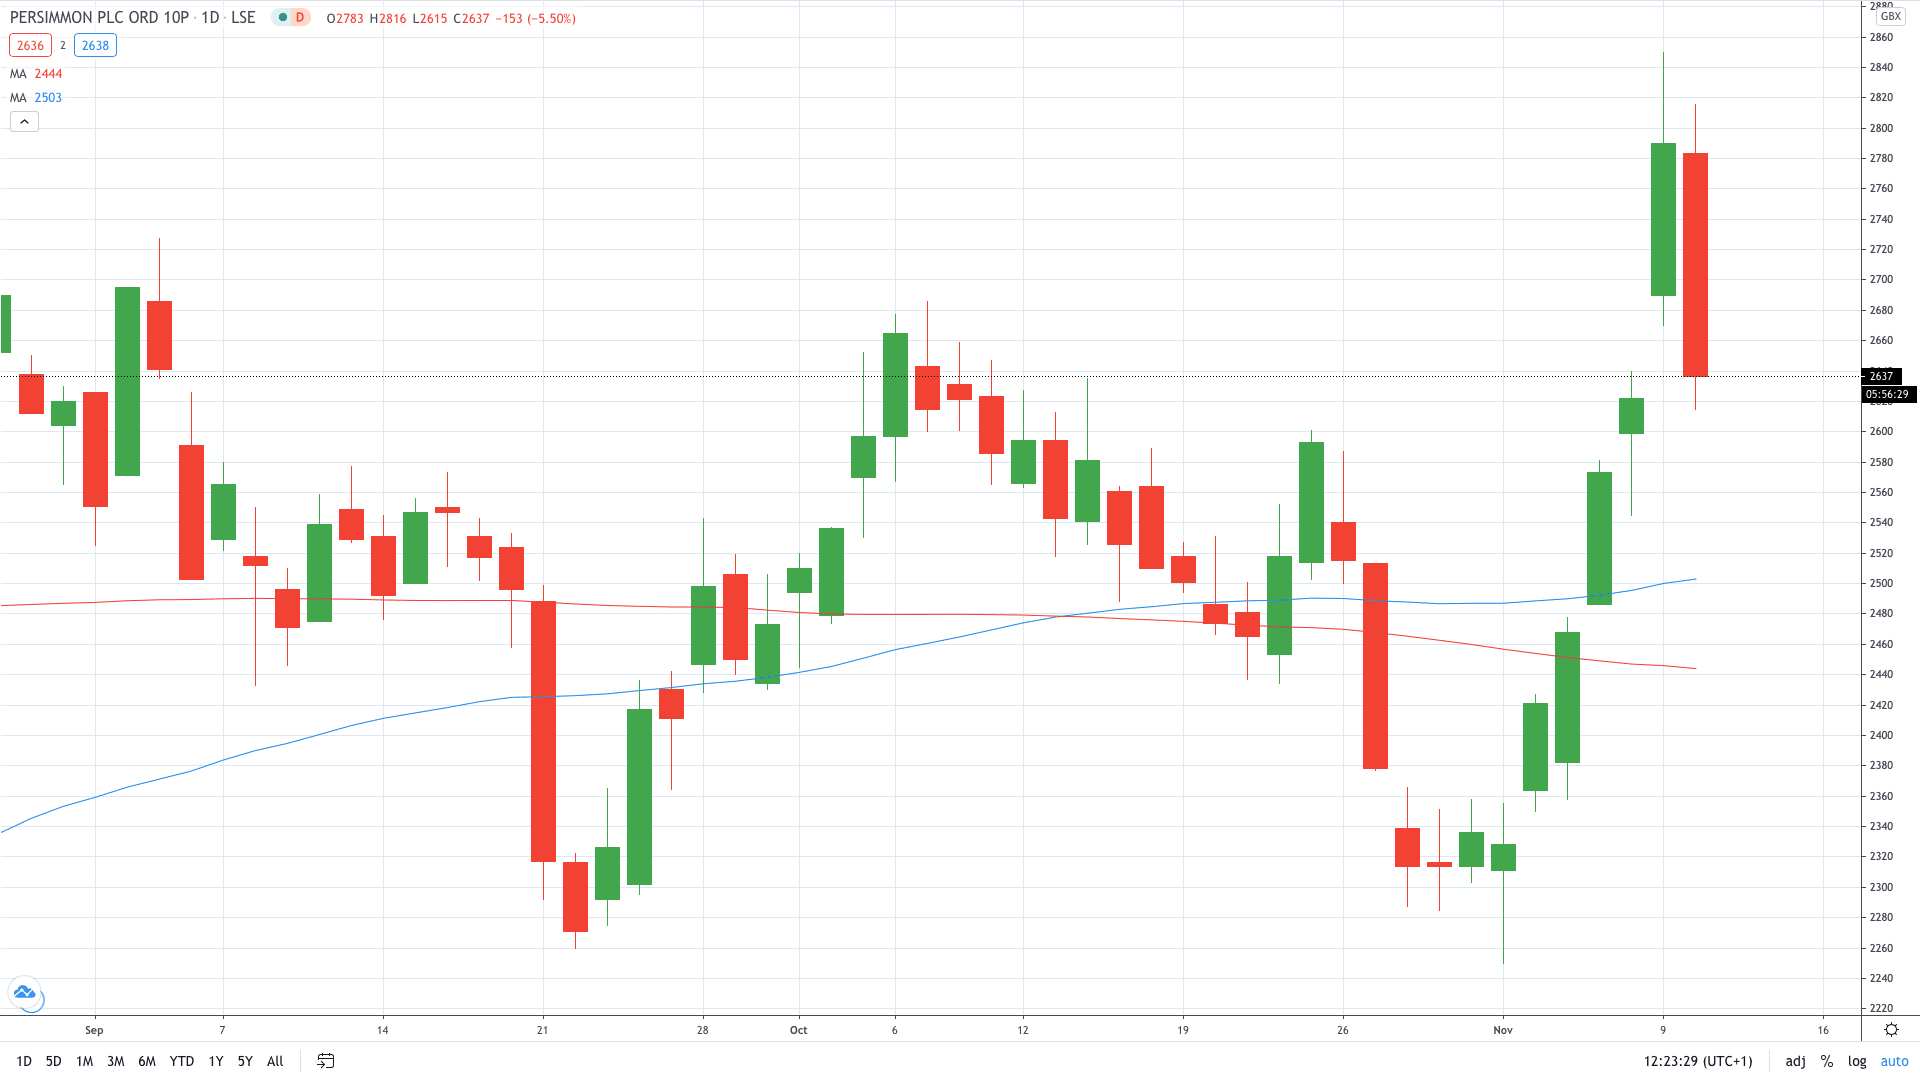 Persimmon share price fell despite strong trading activity November 2020